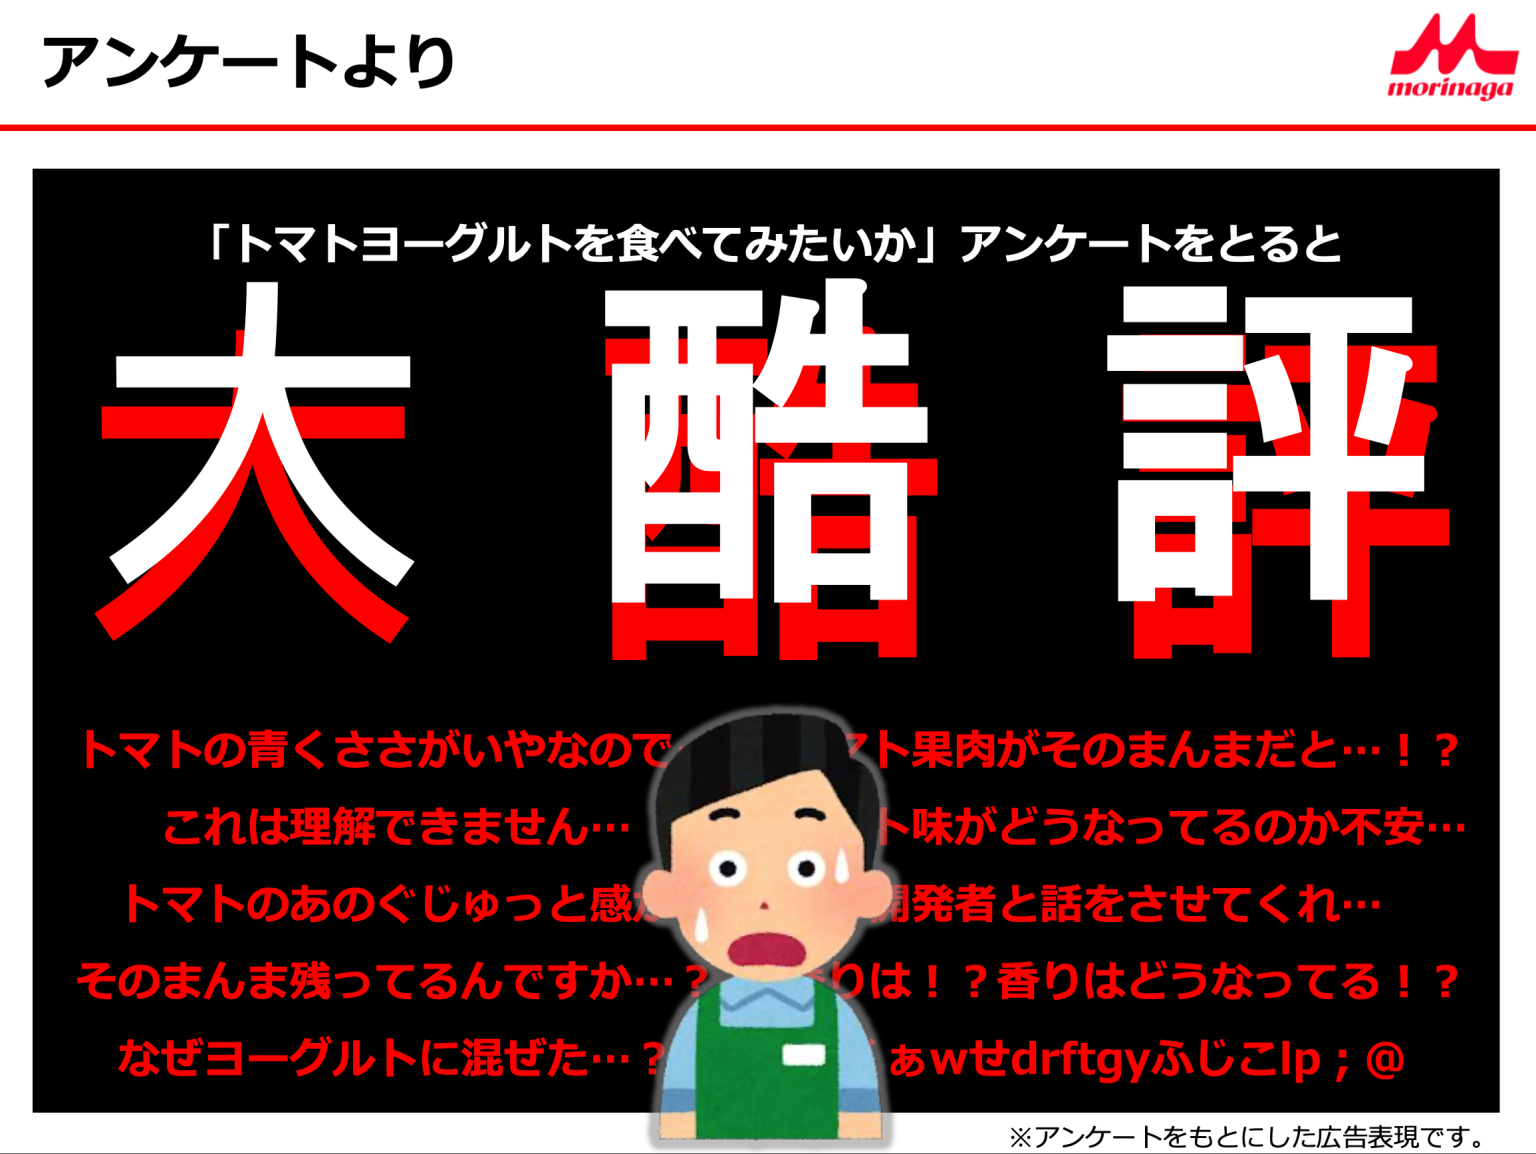 Tomato-Yoghurt-Japan-taste-test-buy-shop-review-Japanese-yogurt-news-2.png